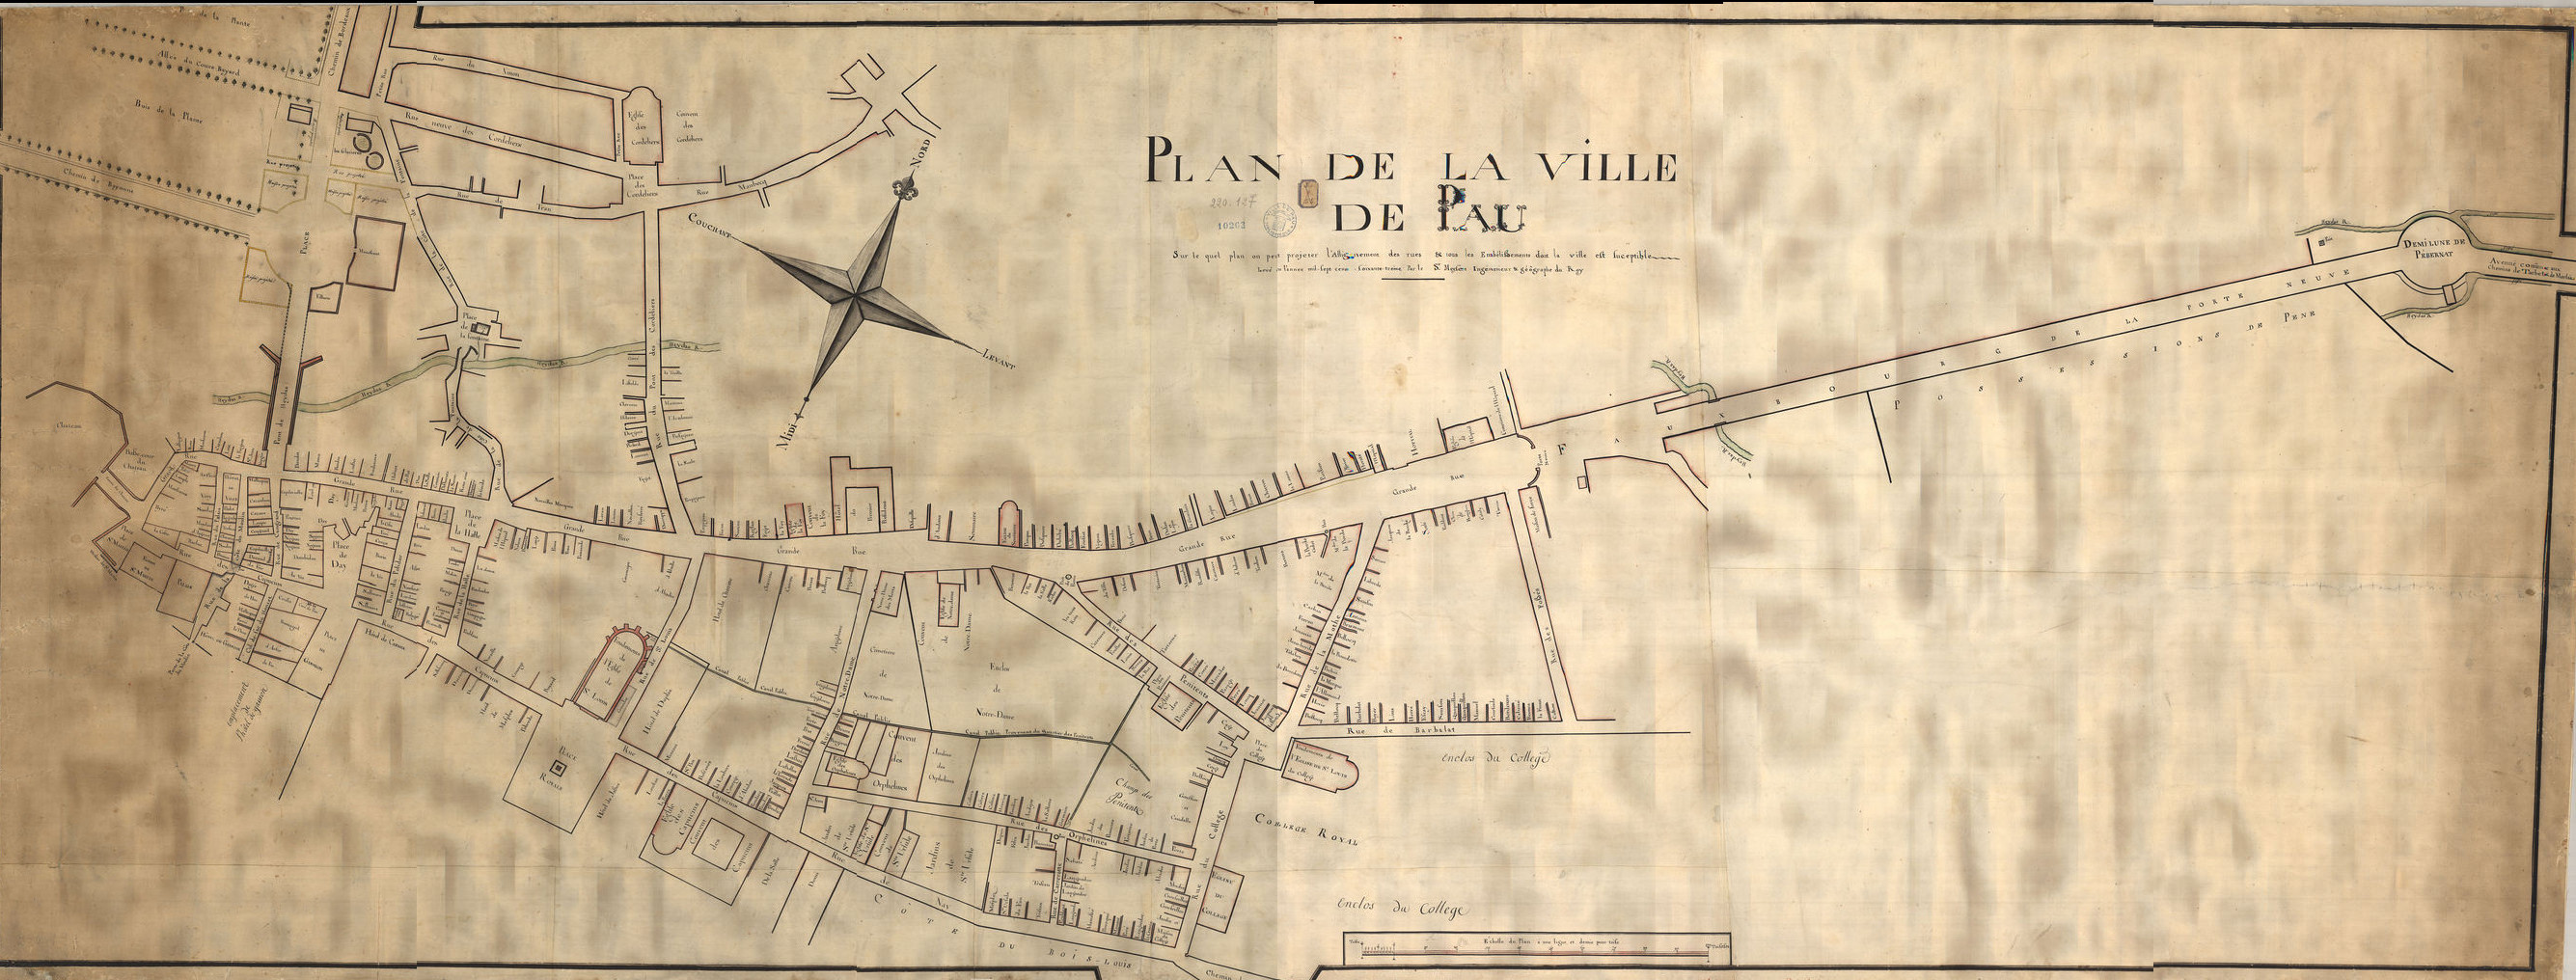 Plan de la ville de Pau en 1773.